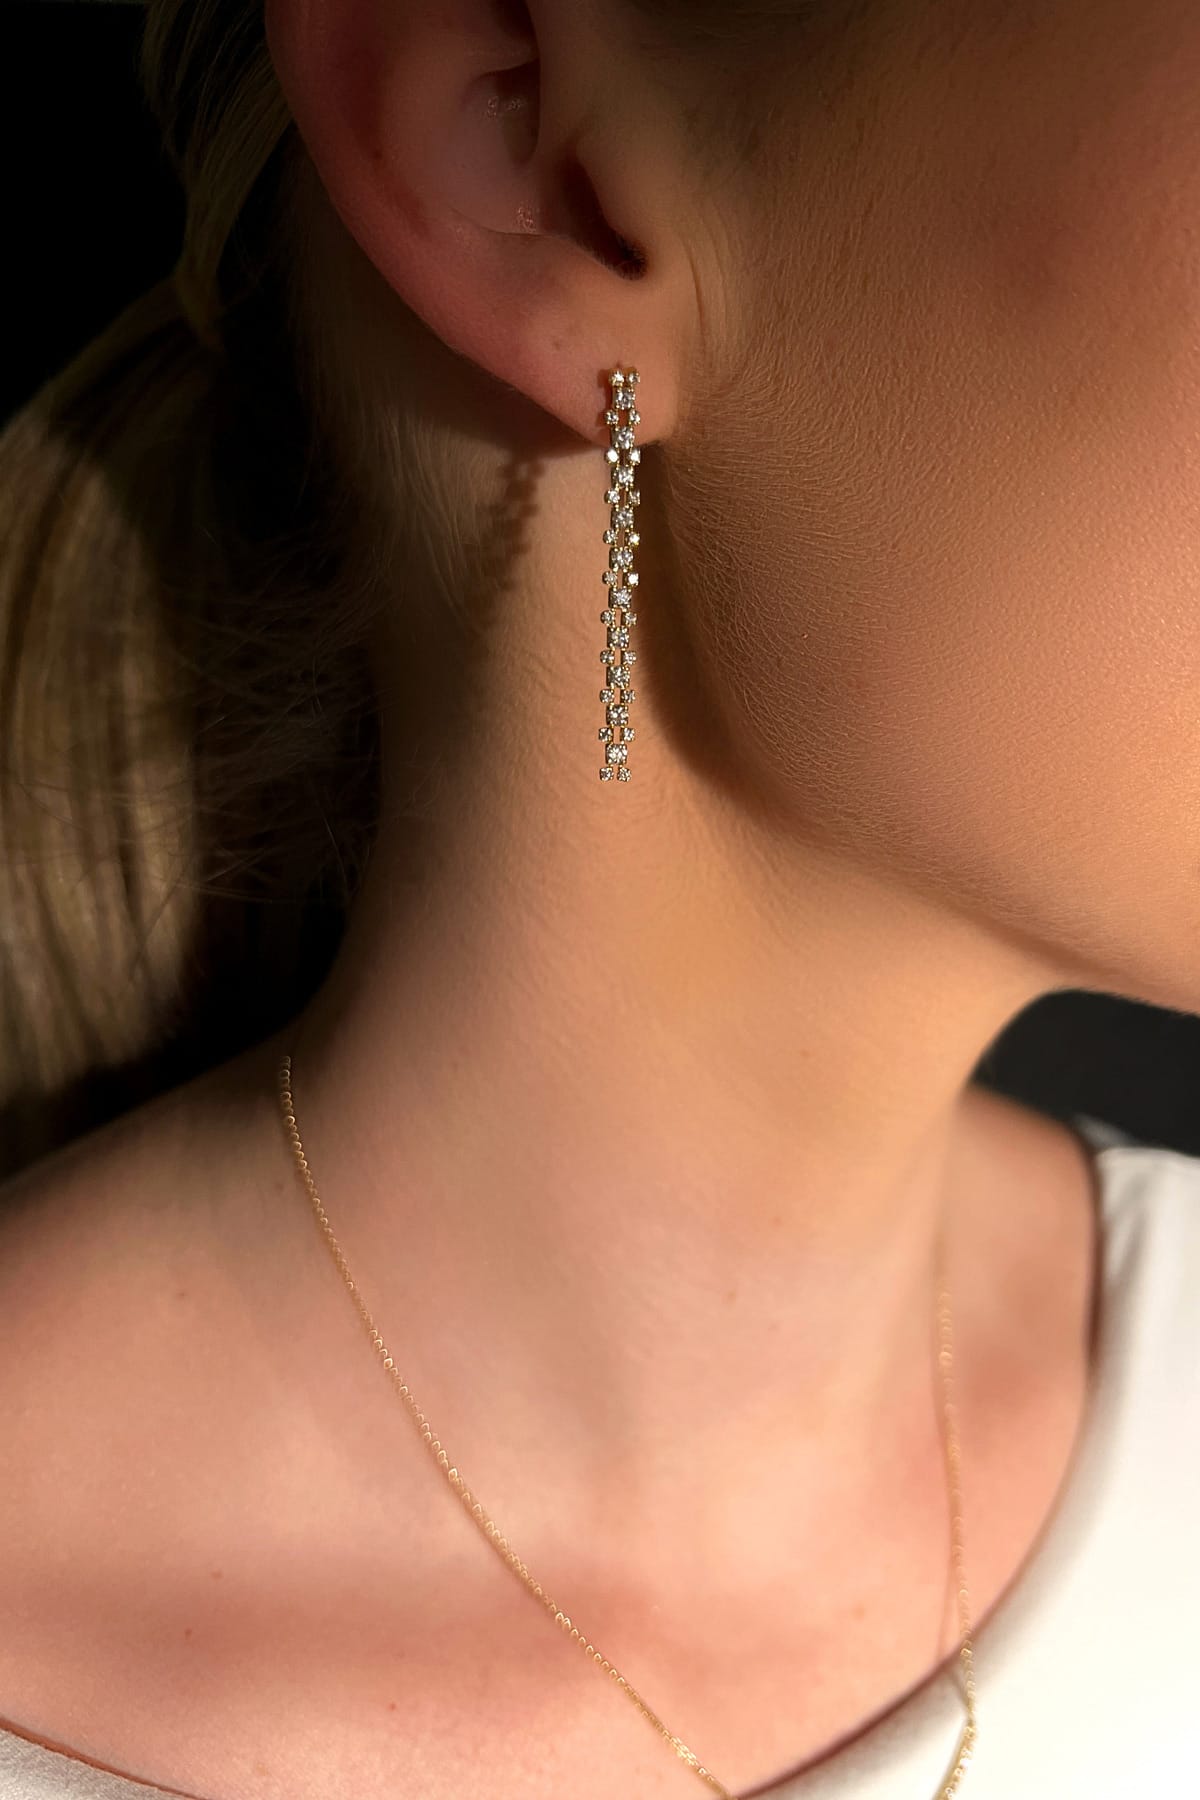 18 Carat Yellow Gold Long Drop Diamond Earrings available at LeGassick Diamonds and Jewellery Gold Coast, Australia.